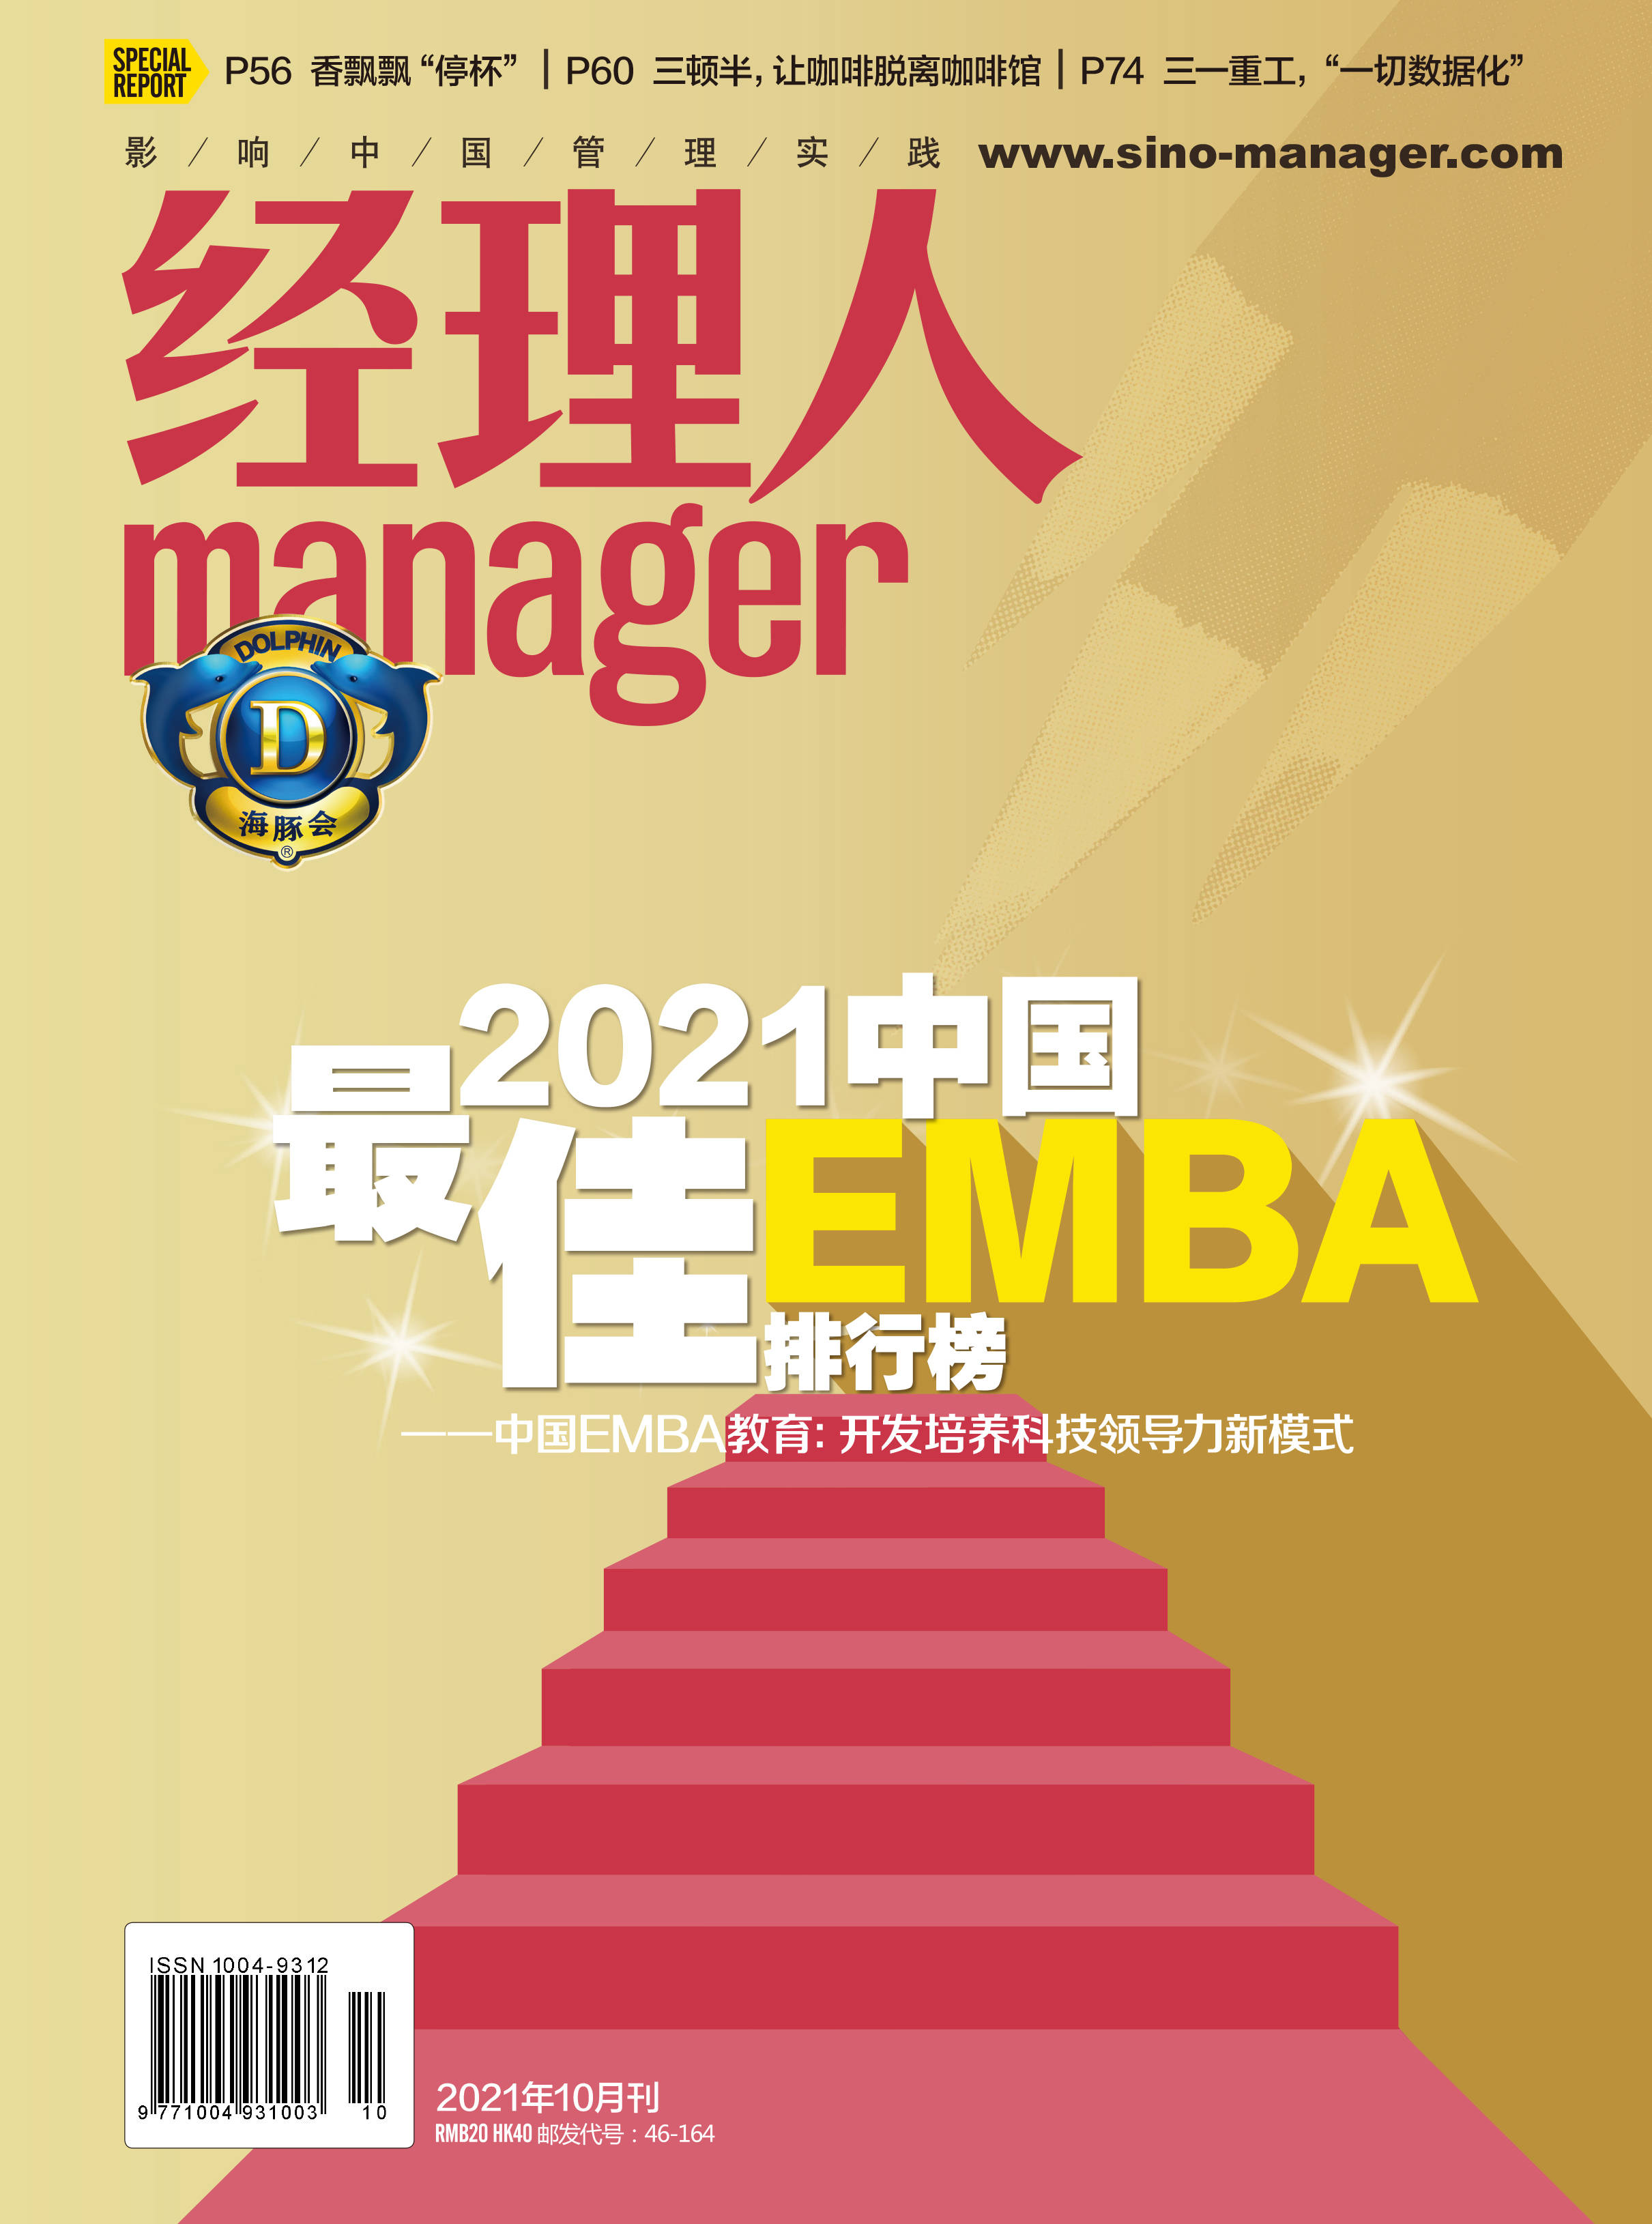 emba排行榜_2021中国最佳EMBA排行榜——中国EMBA教育:开发培养科技领导力...